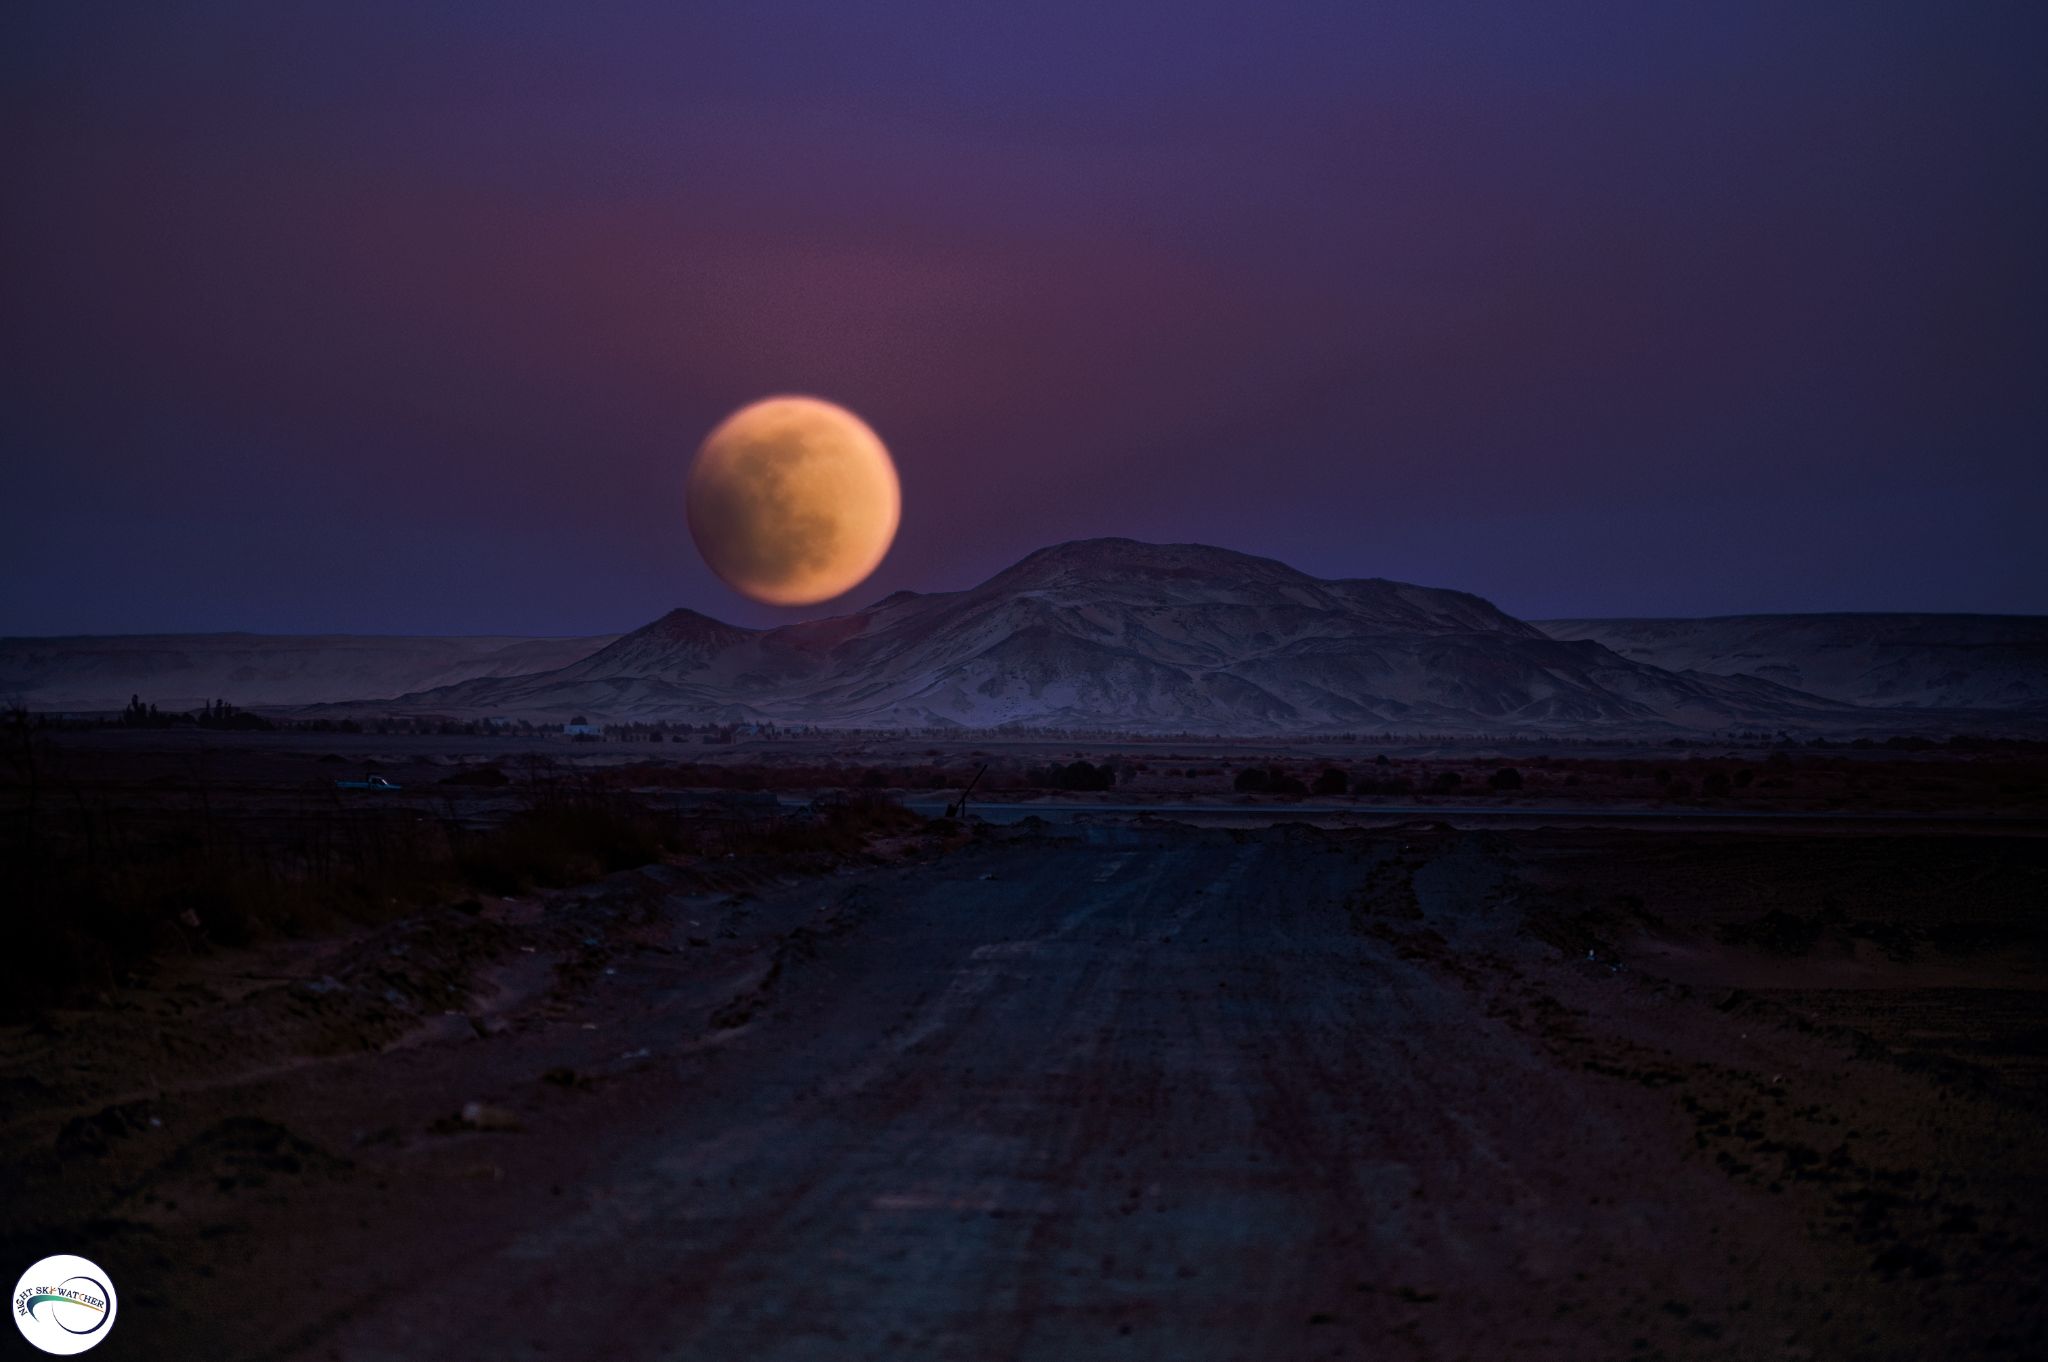 Community photo by Osama Fathi | Black desert